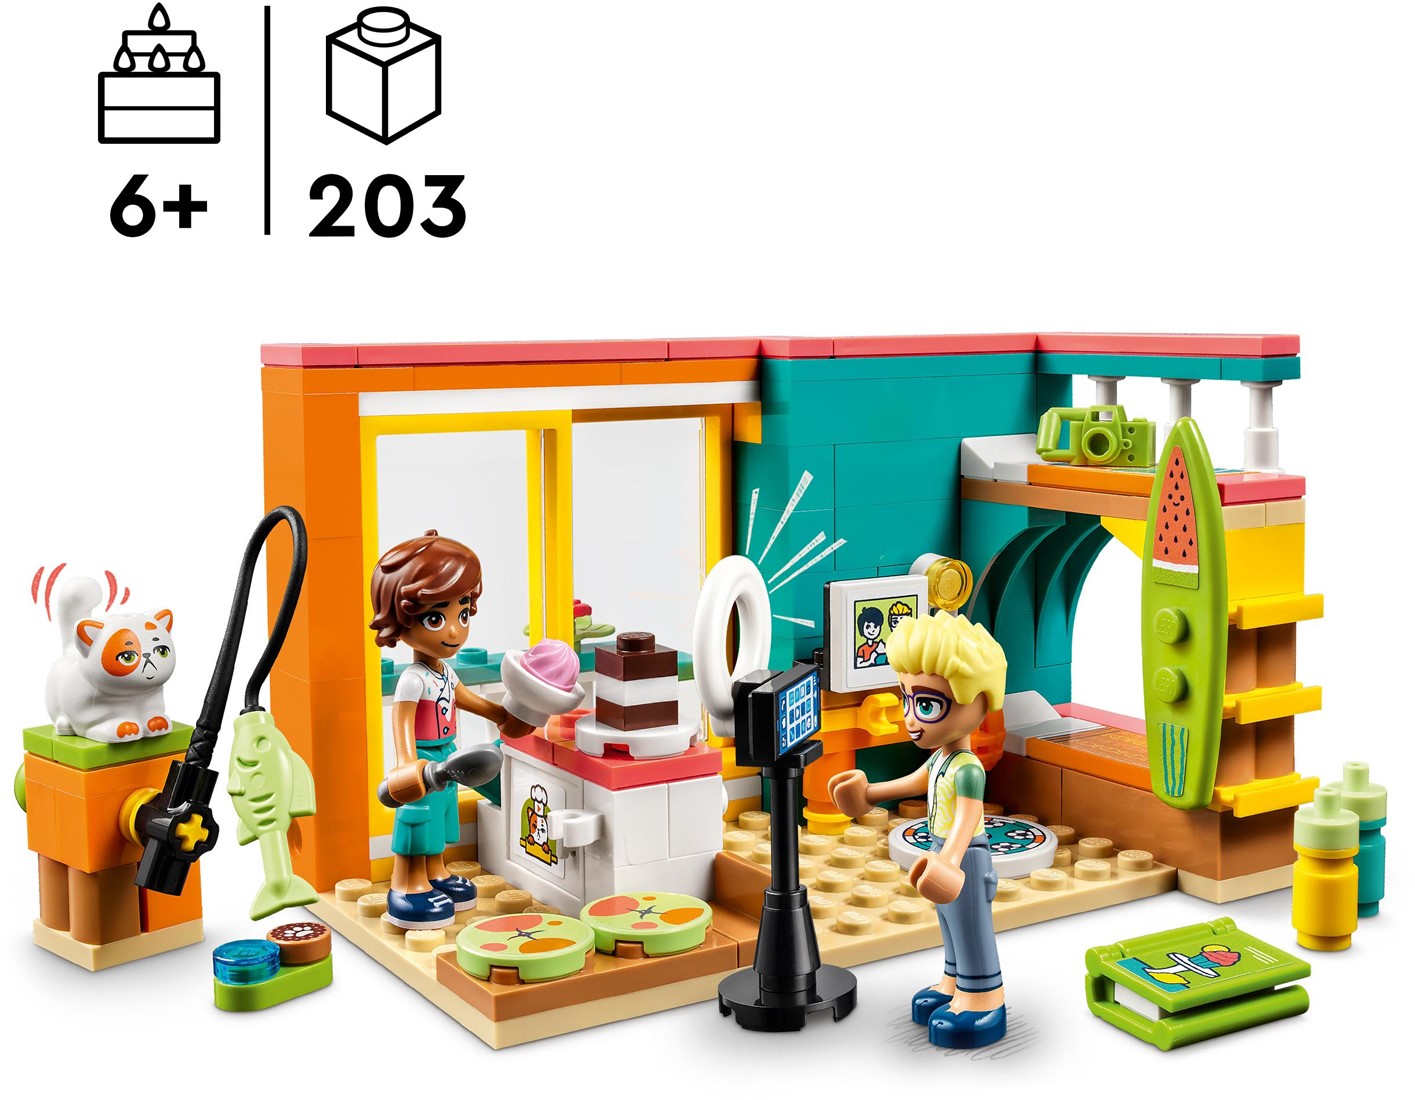 Friends - La chambre de Léo - LEGO